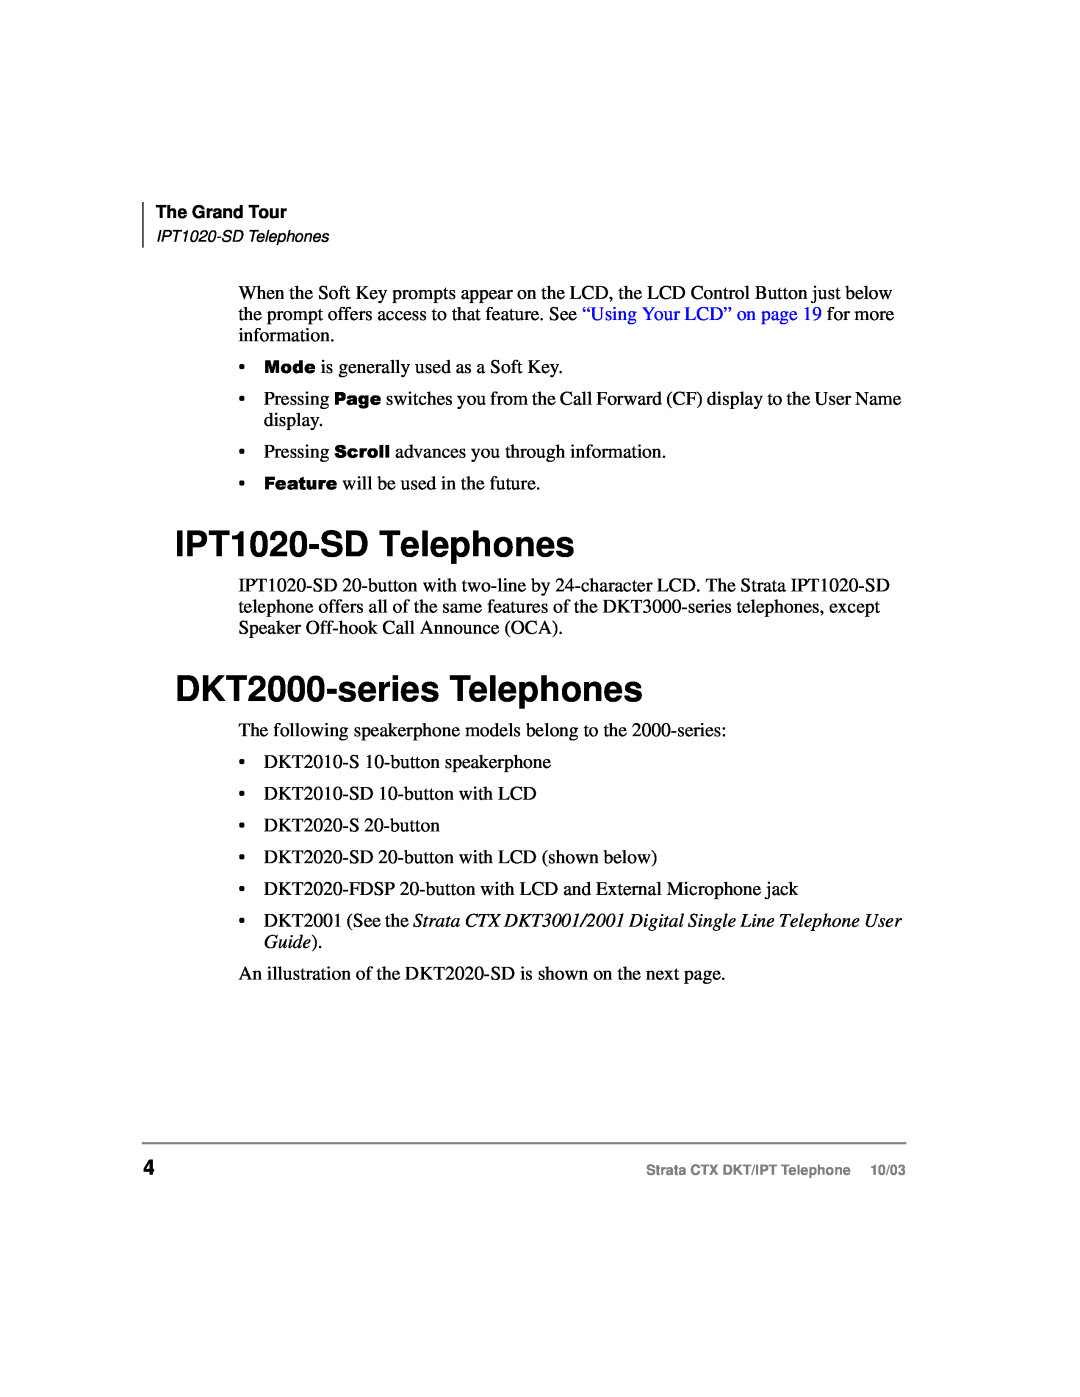 Toshiba manual IPT1020-SD Telephones, DKT2000-series Telephones 